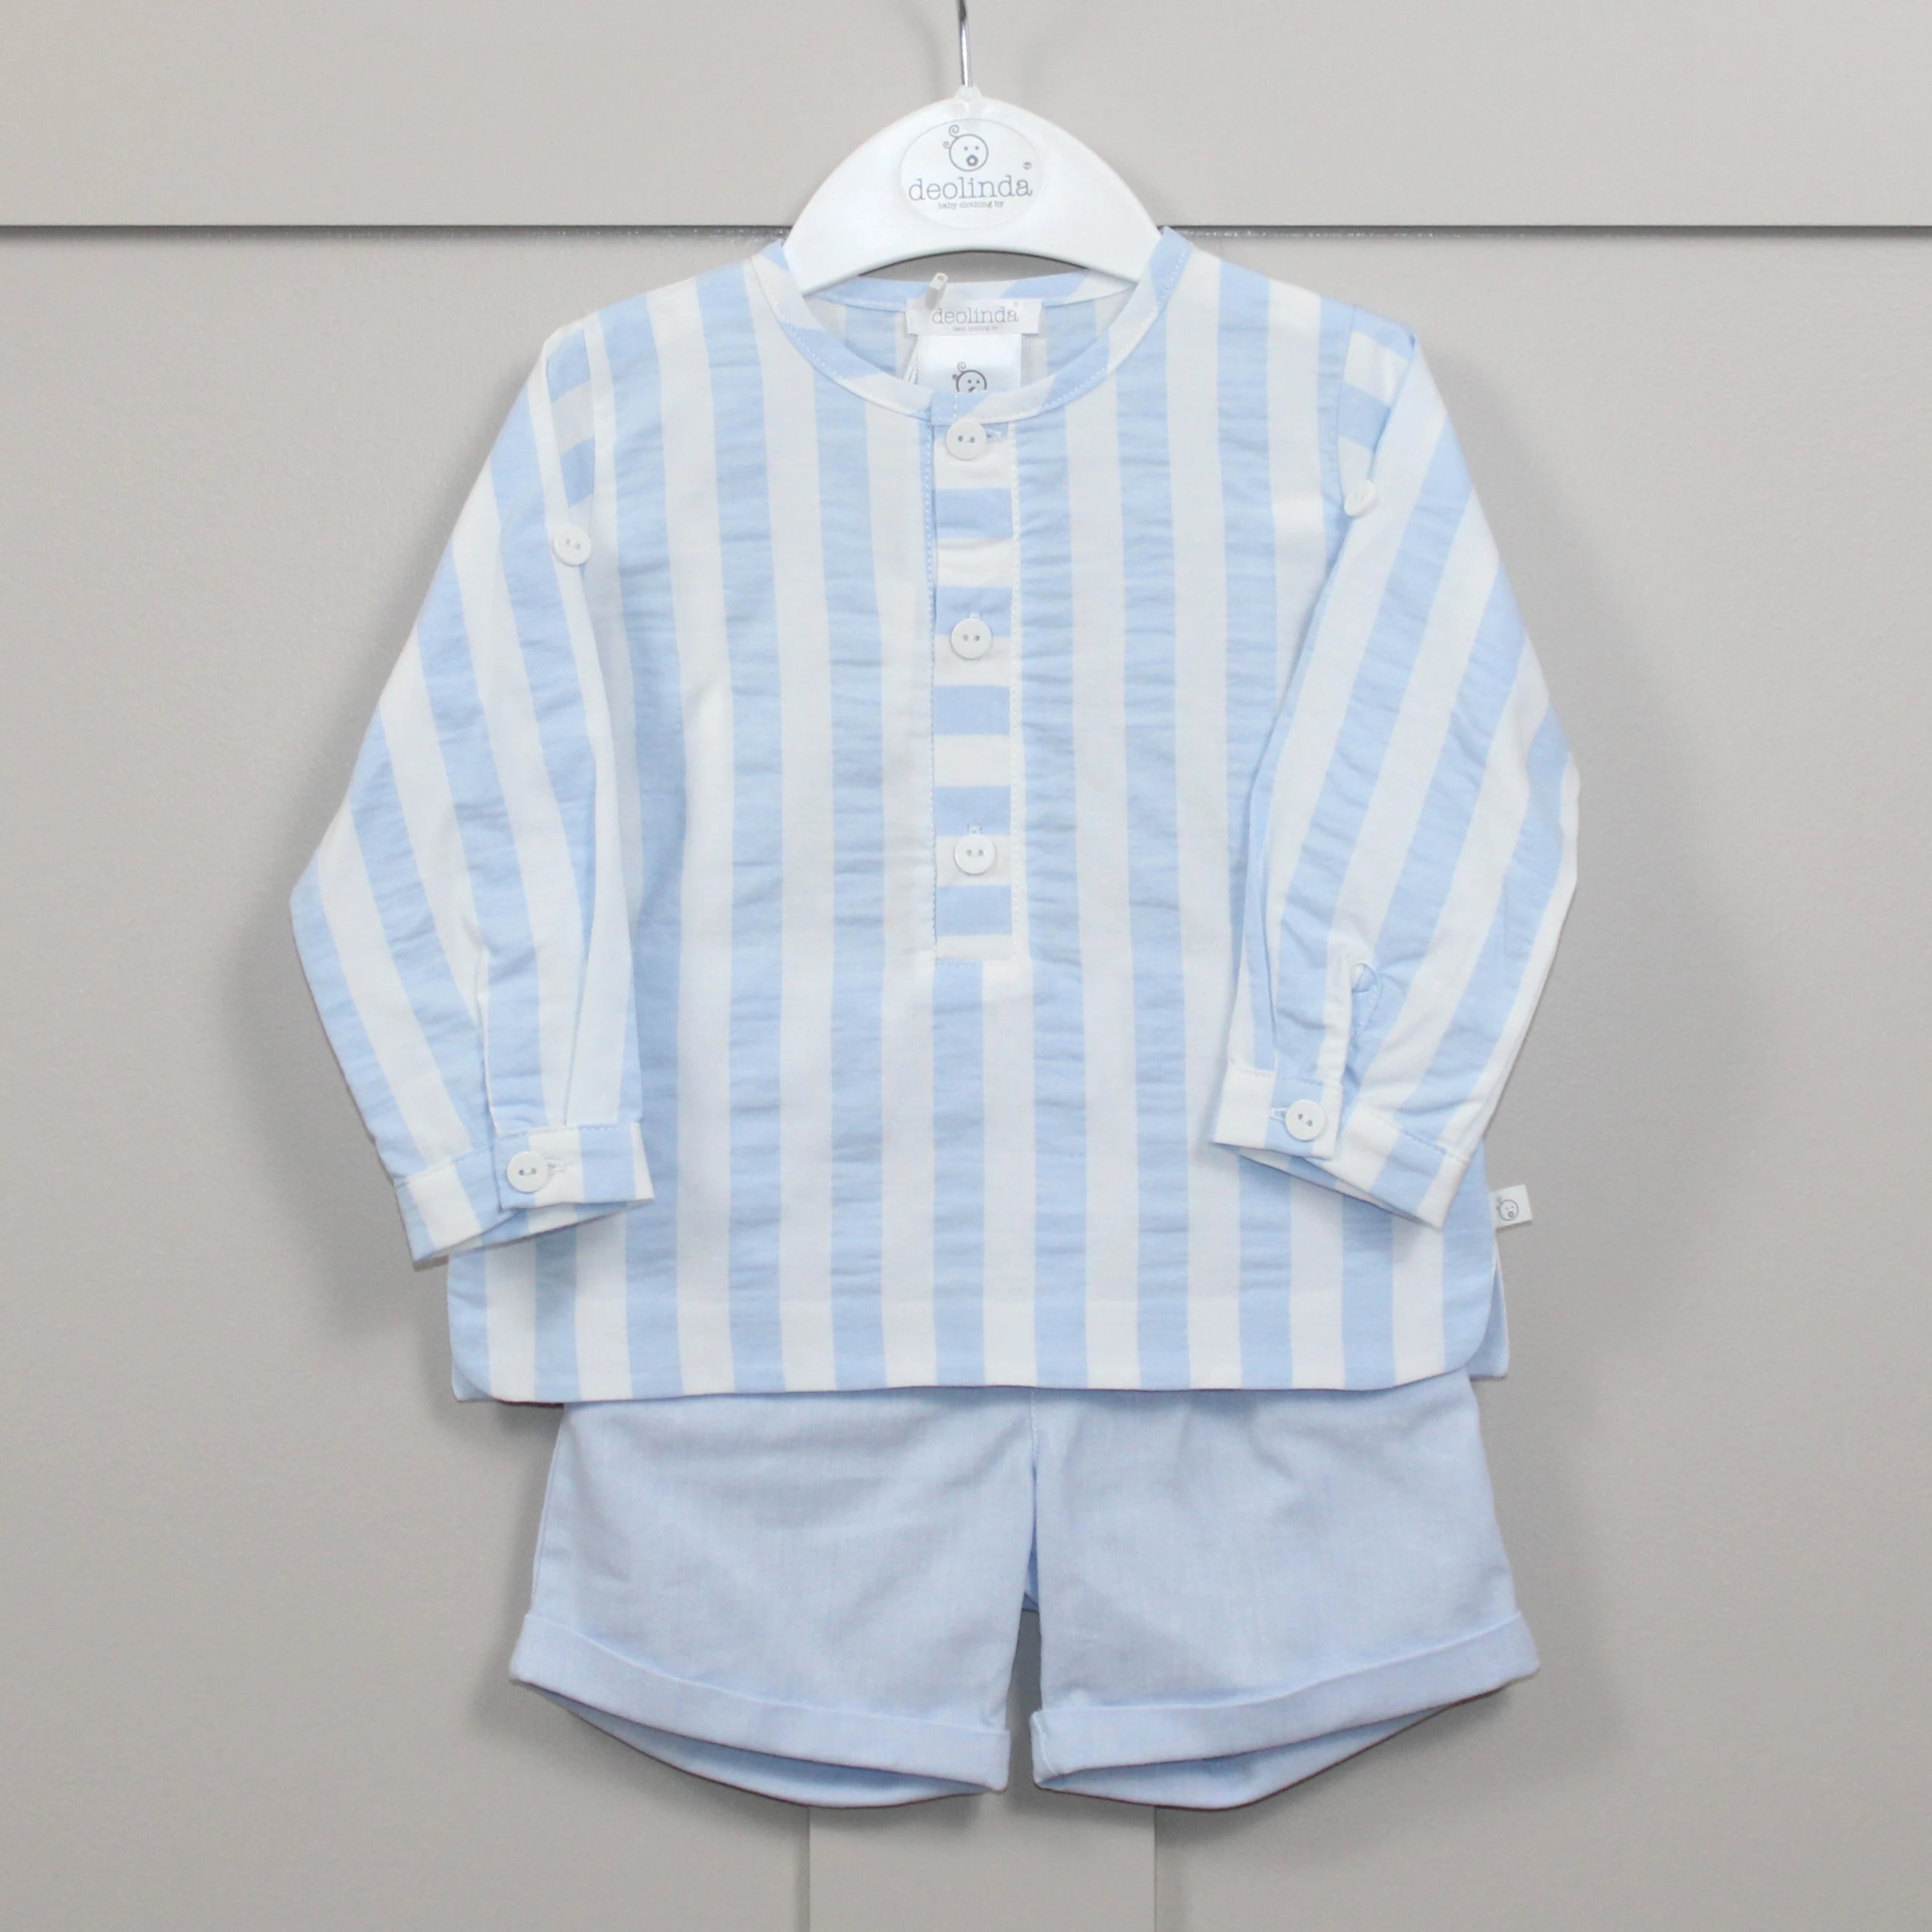 deolinda Blue Stripe Shirt and Shorts